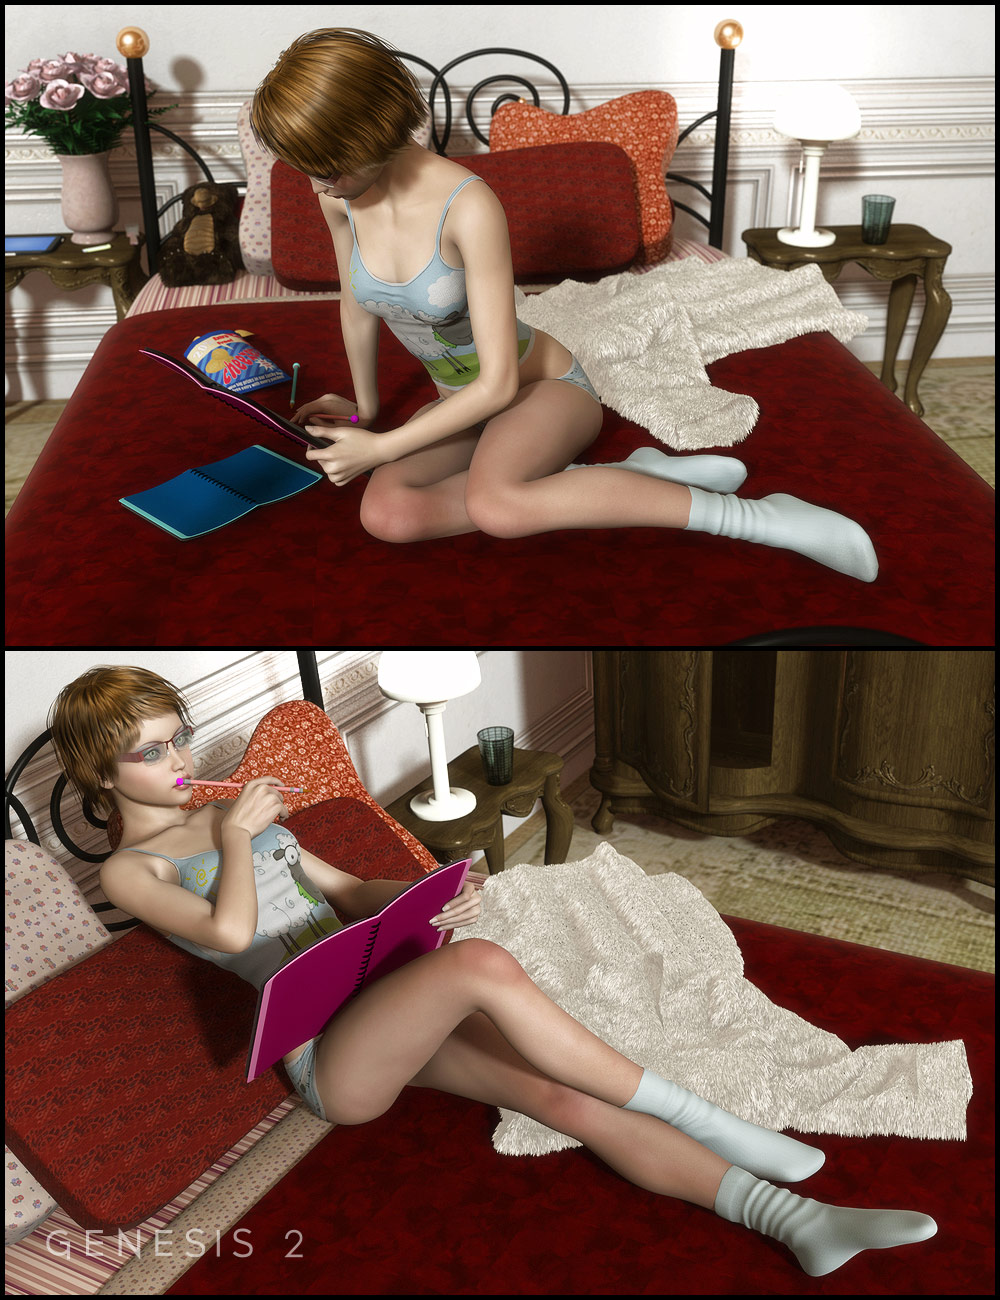 RW My Dear Diary Props & Poses by: Renderwelten, 3D Models by Daz 3D